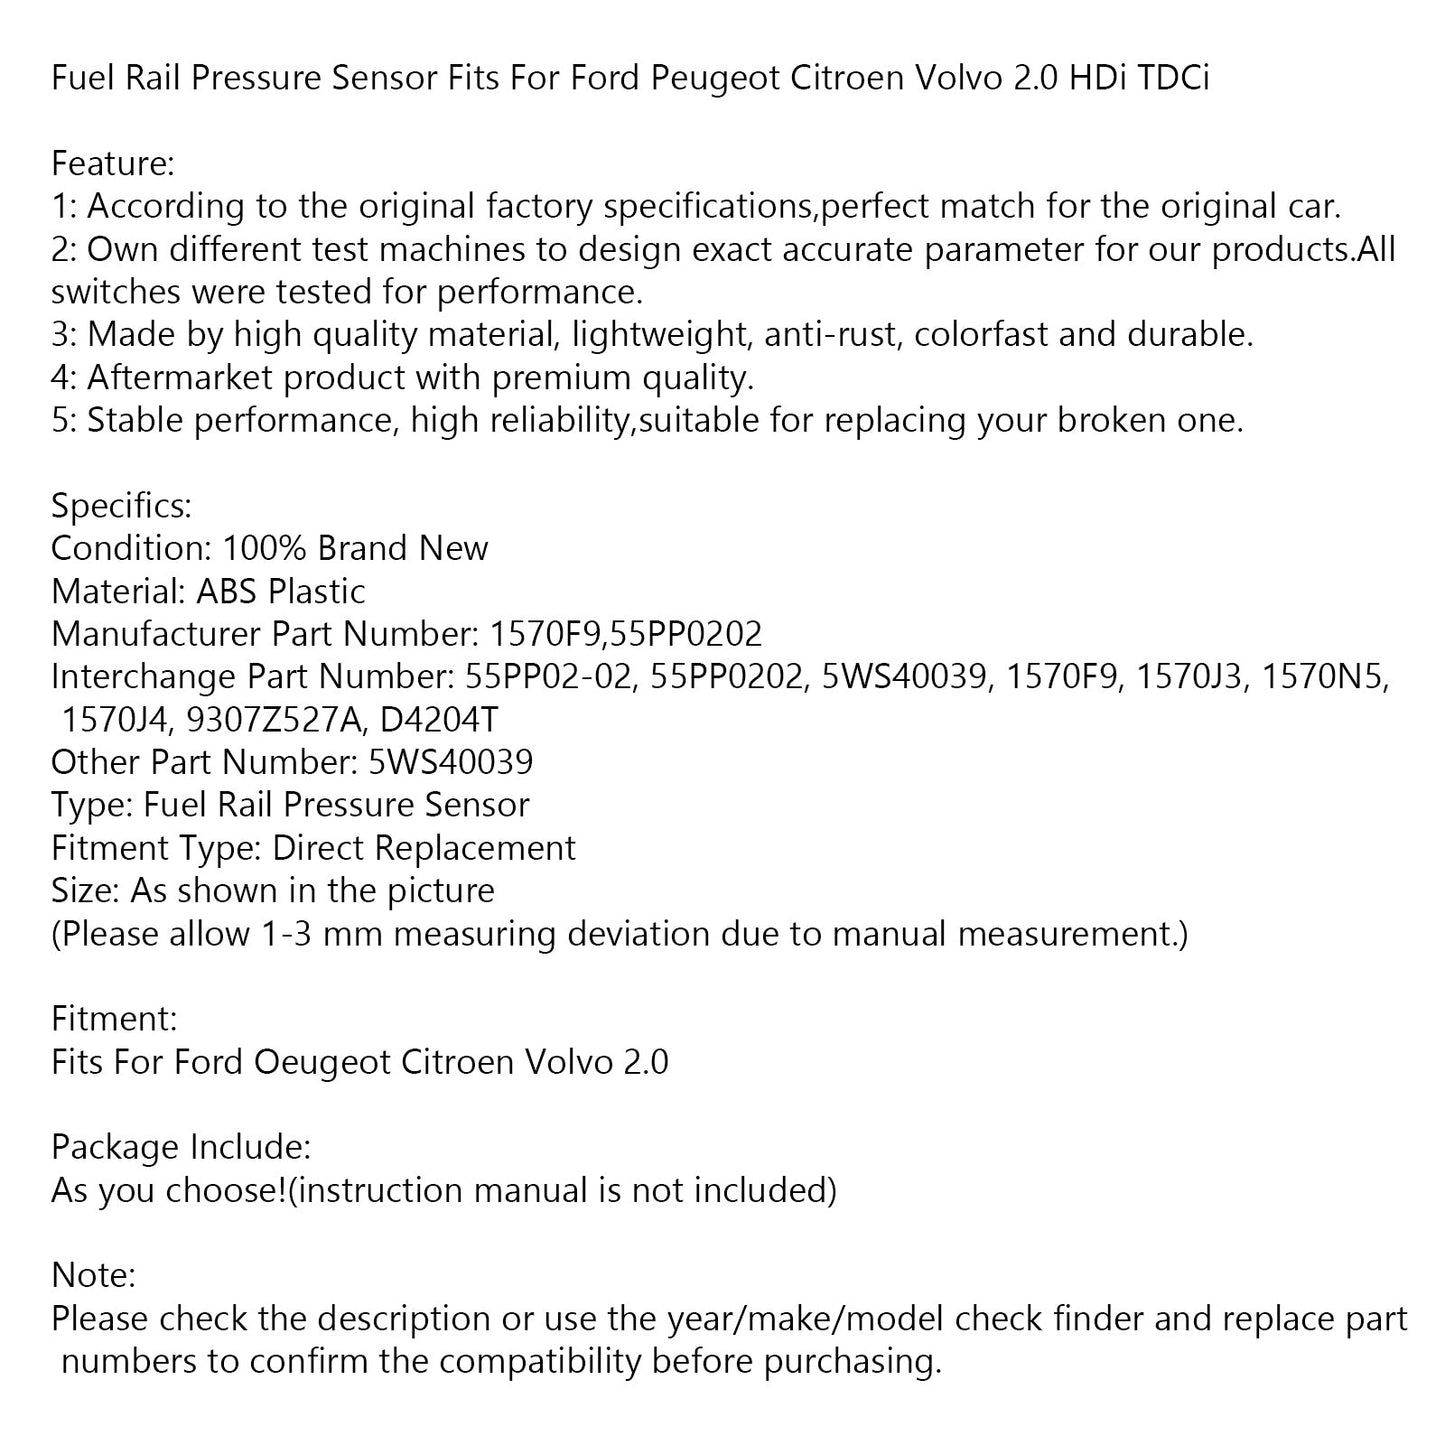 Fuel Rail Pressure Sensor Fit For Ford Peugeot Citroen Volvo 2.0